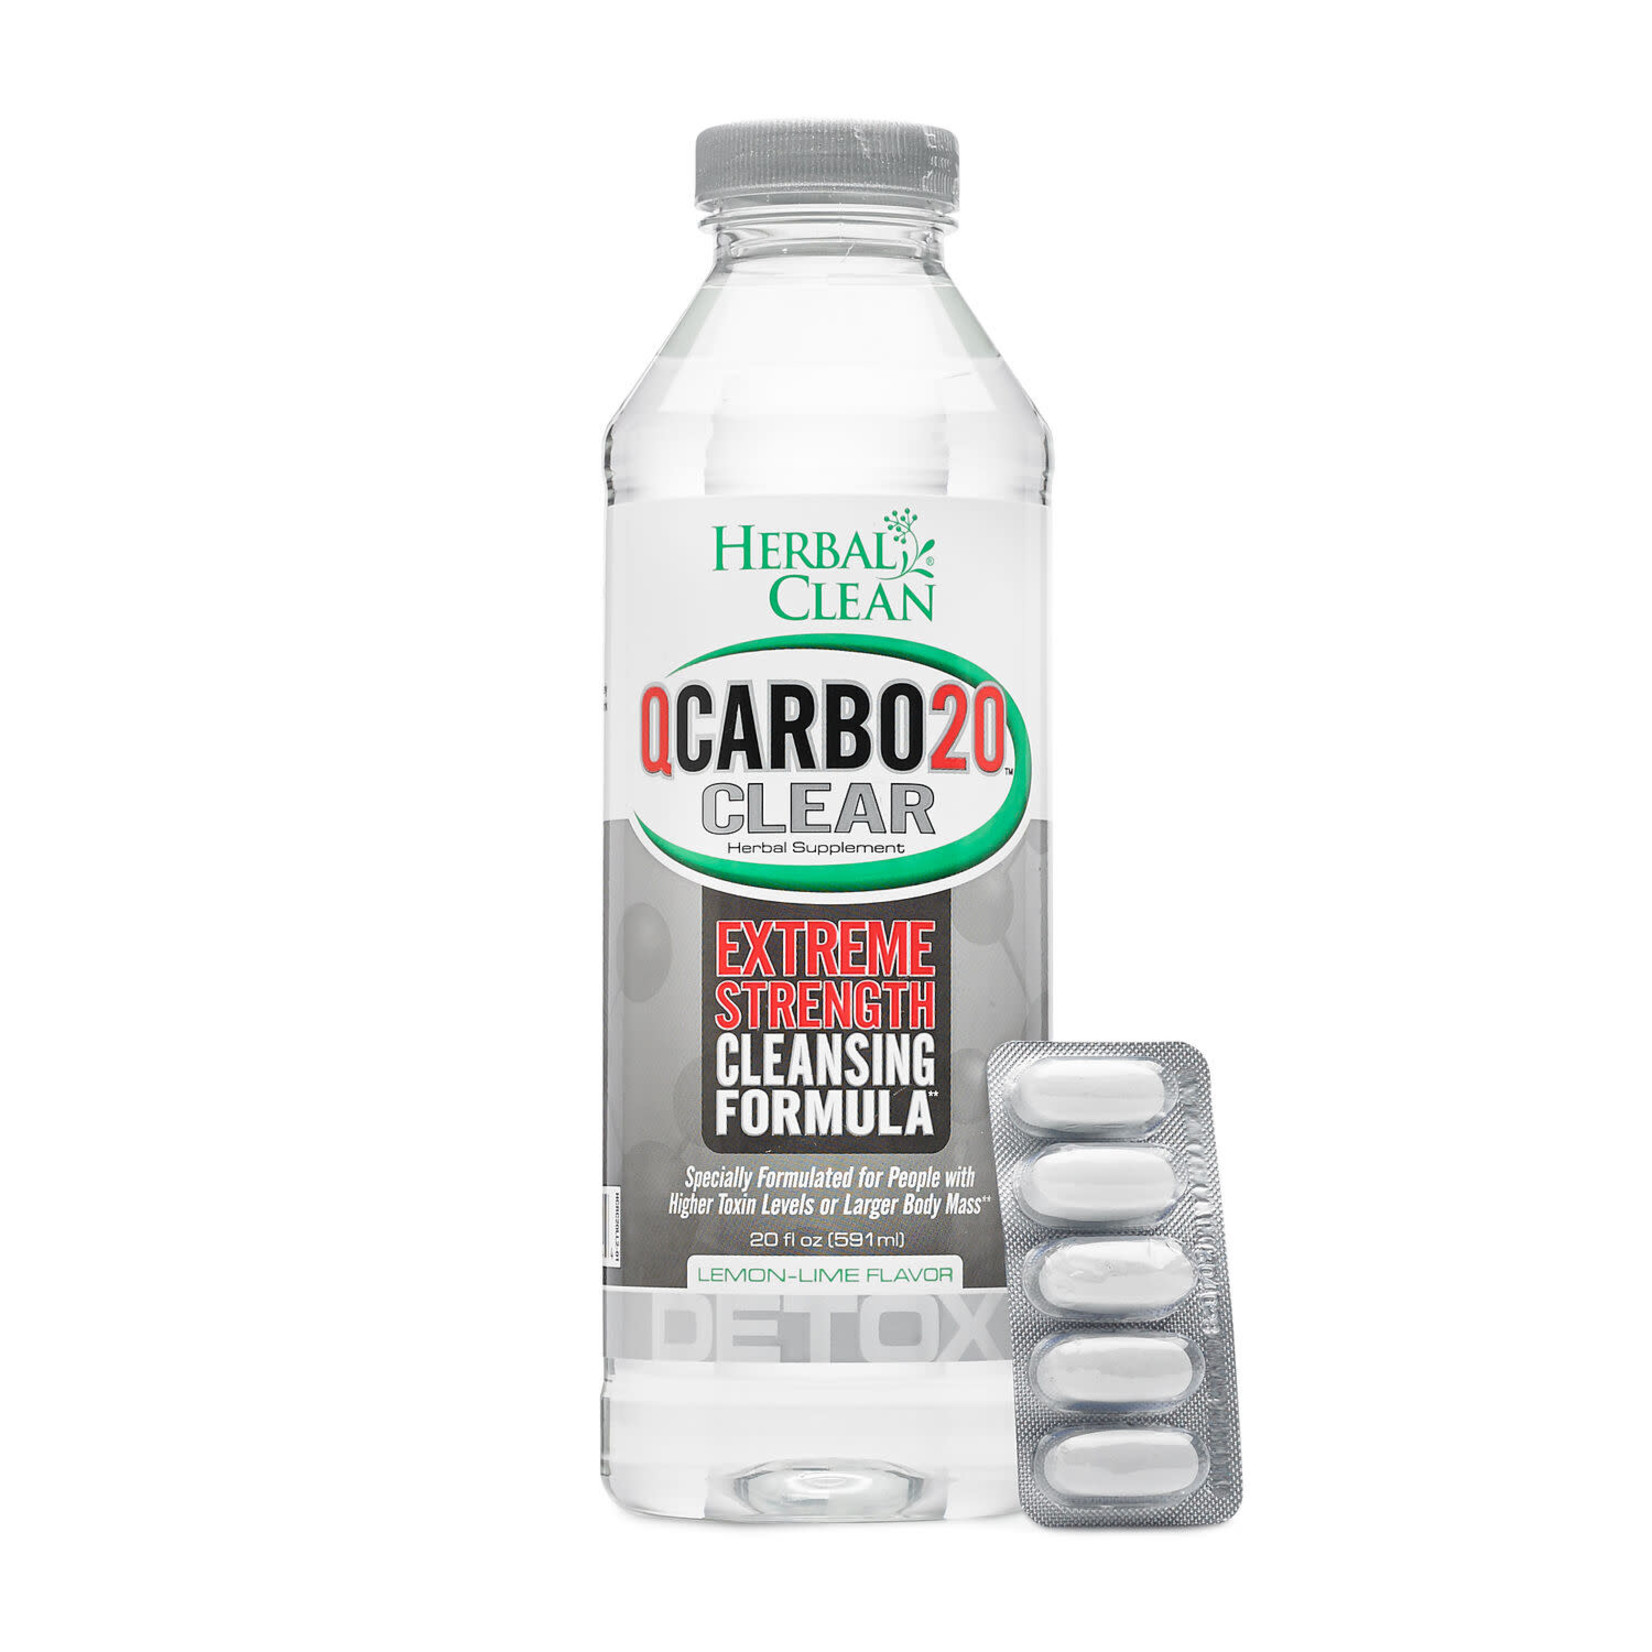 Herbal Clean QCarbo20 Clear Maximum Cleanse Detox Drink - 20oz